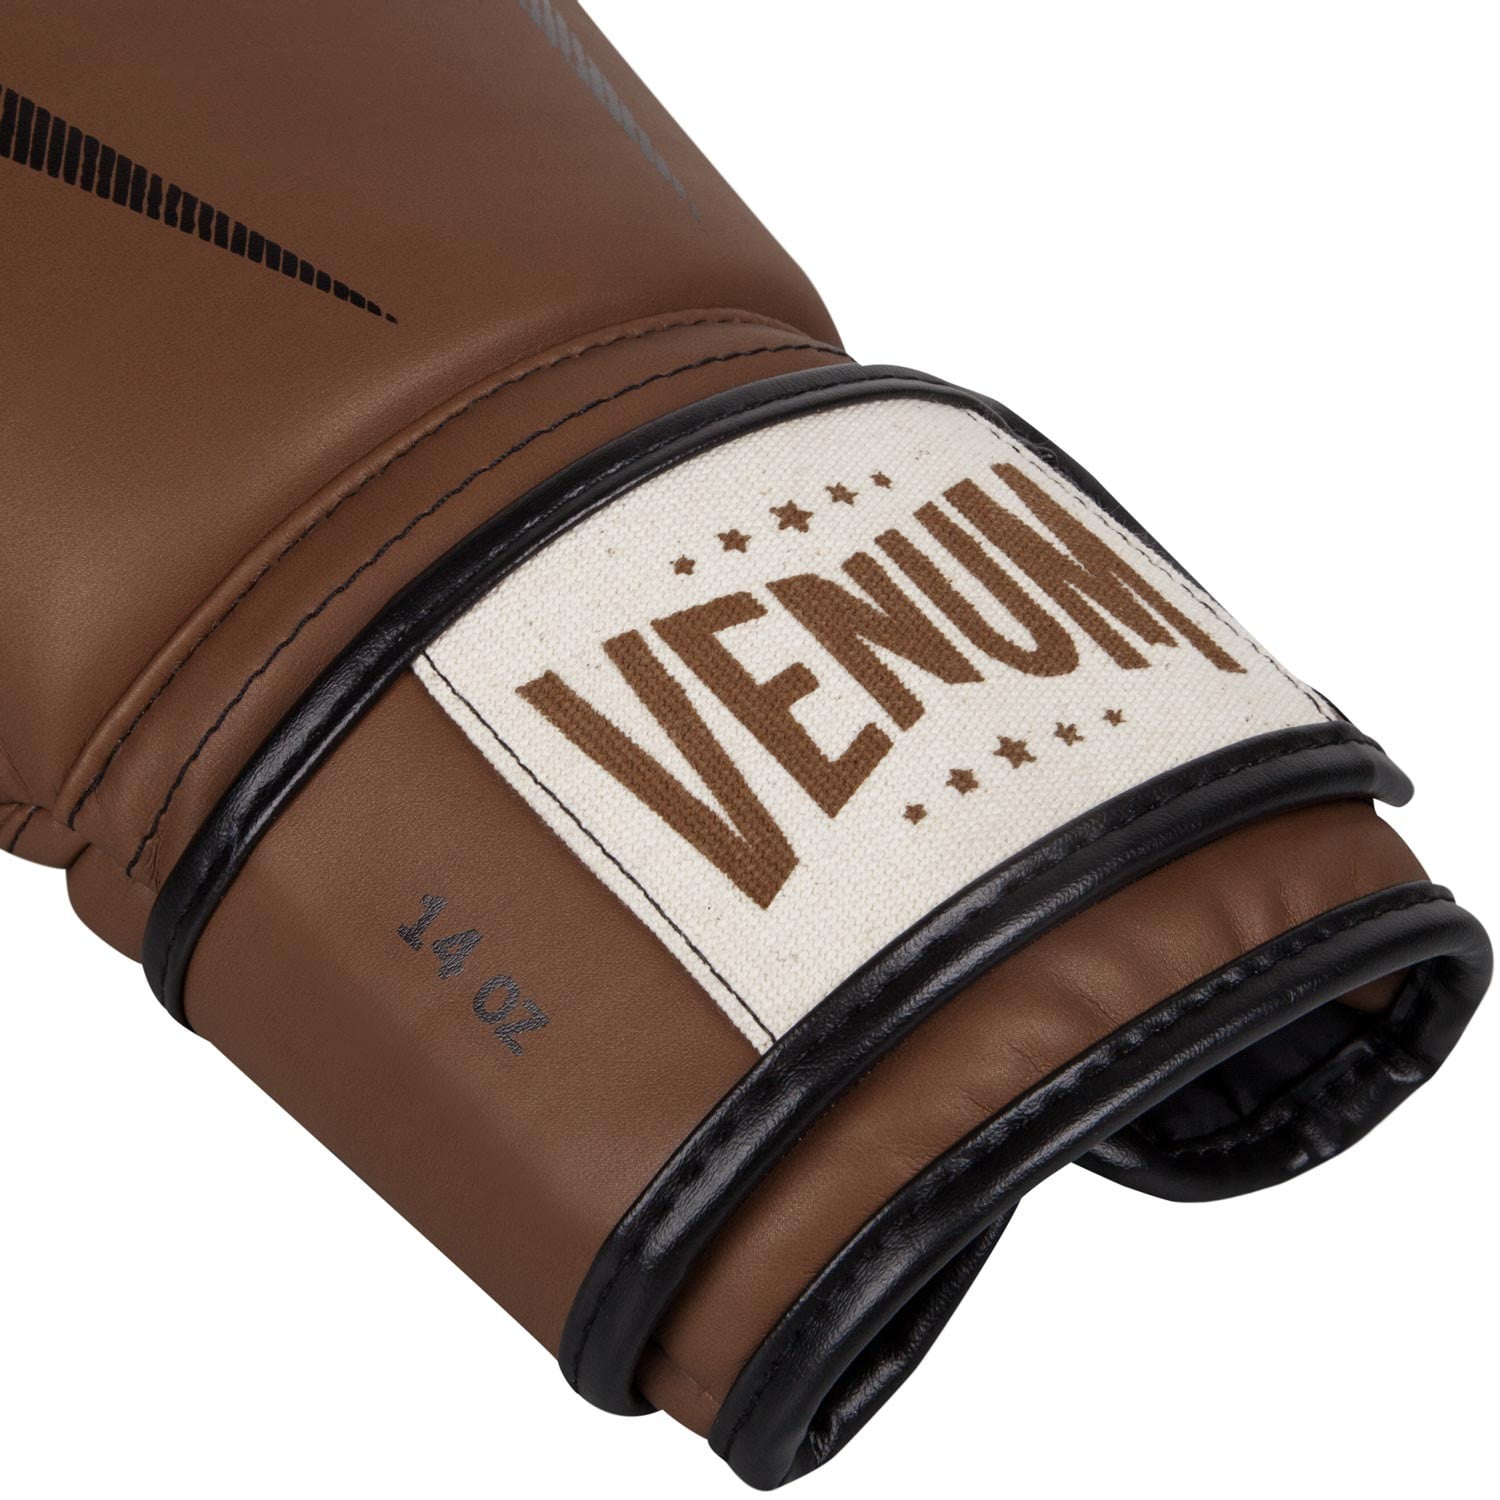 Venum Giant Sparring Boxing Gloves VENUM-02735-011-10oz-parent